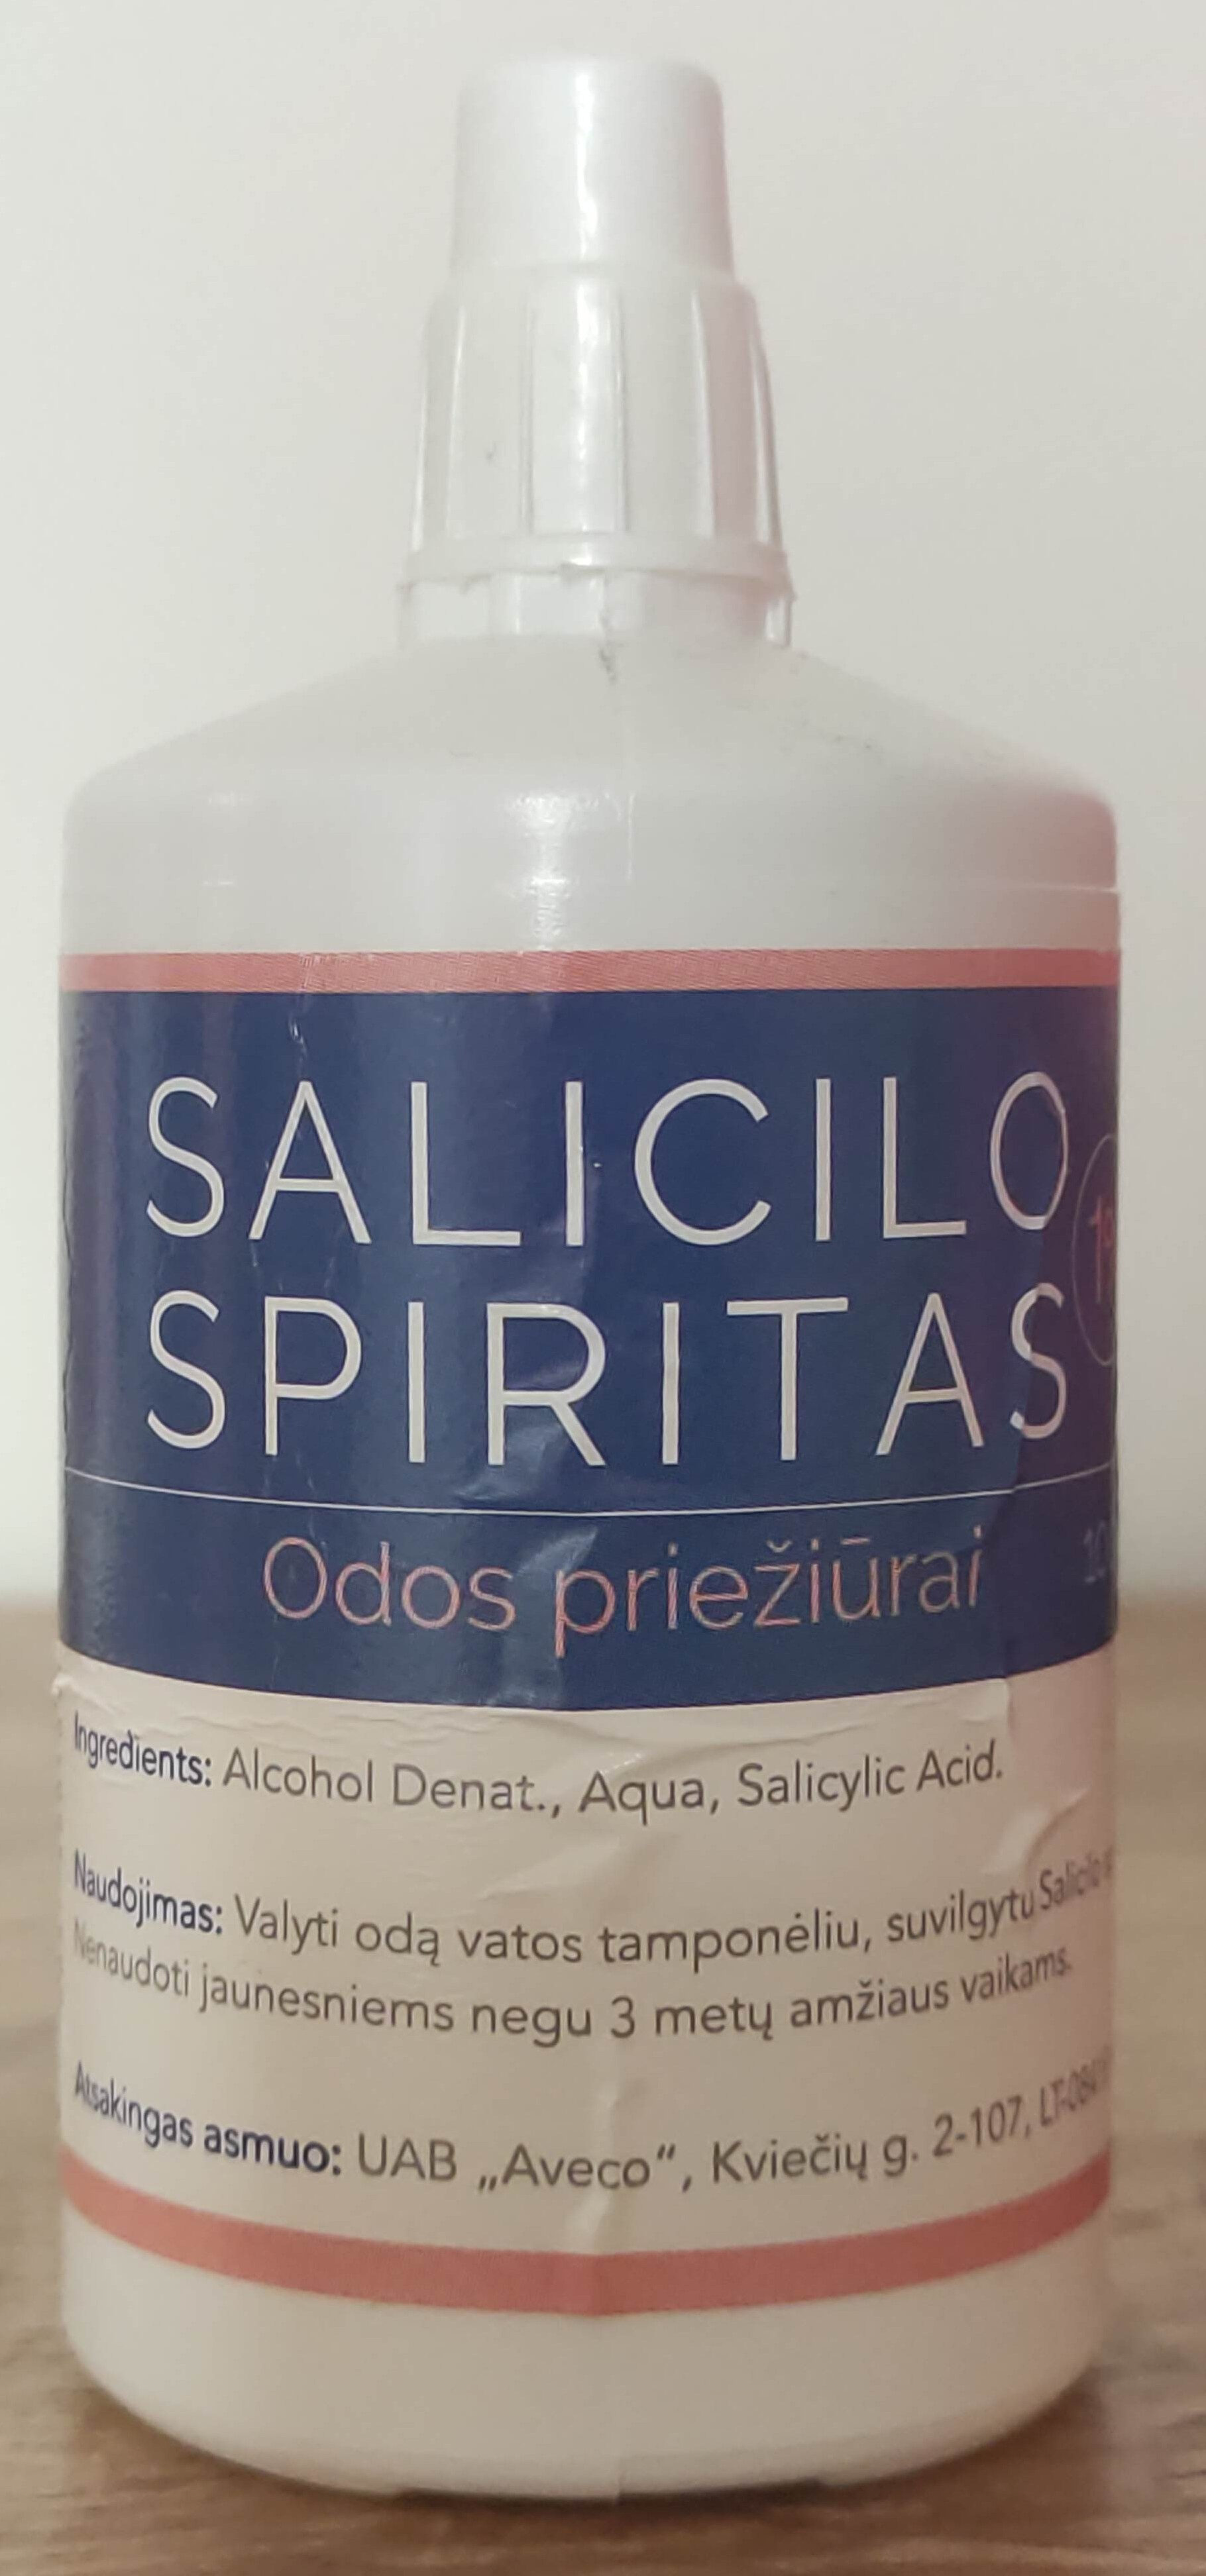 Salicilo spiritas - Produkto - lt